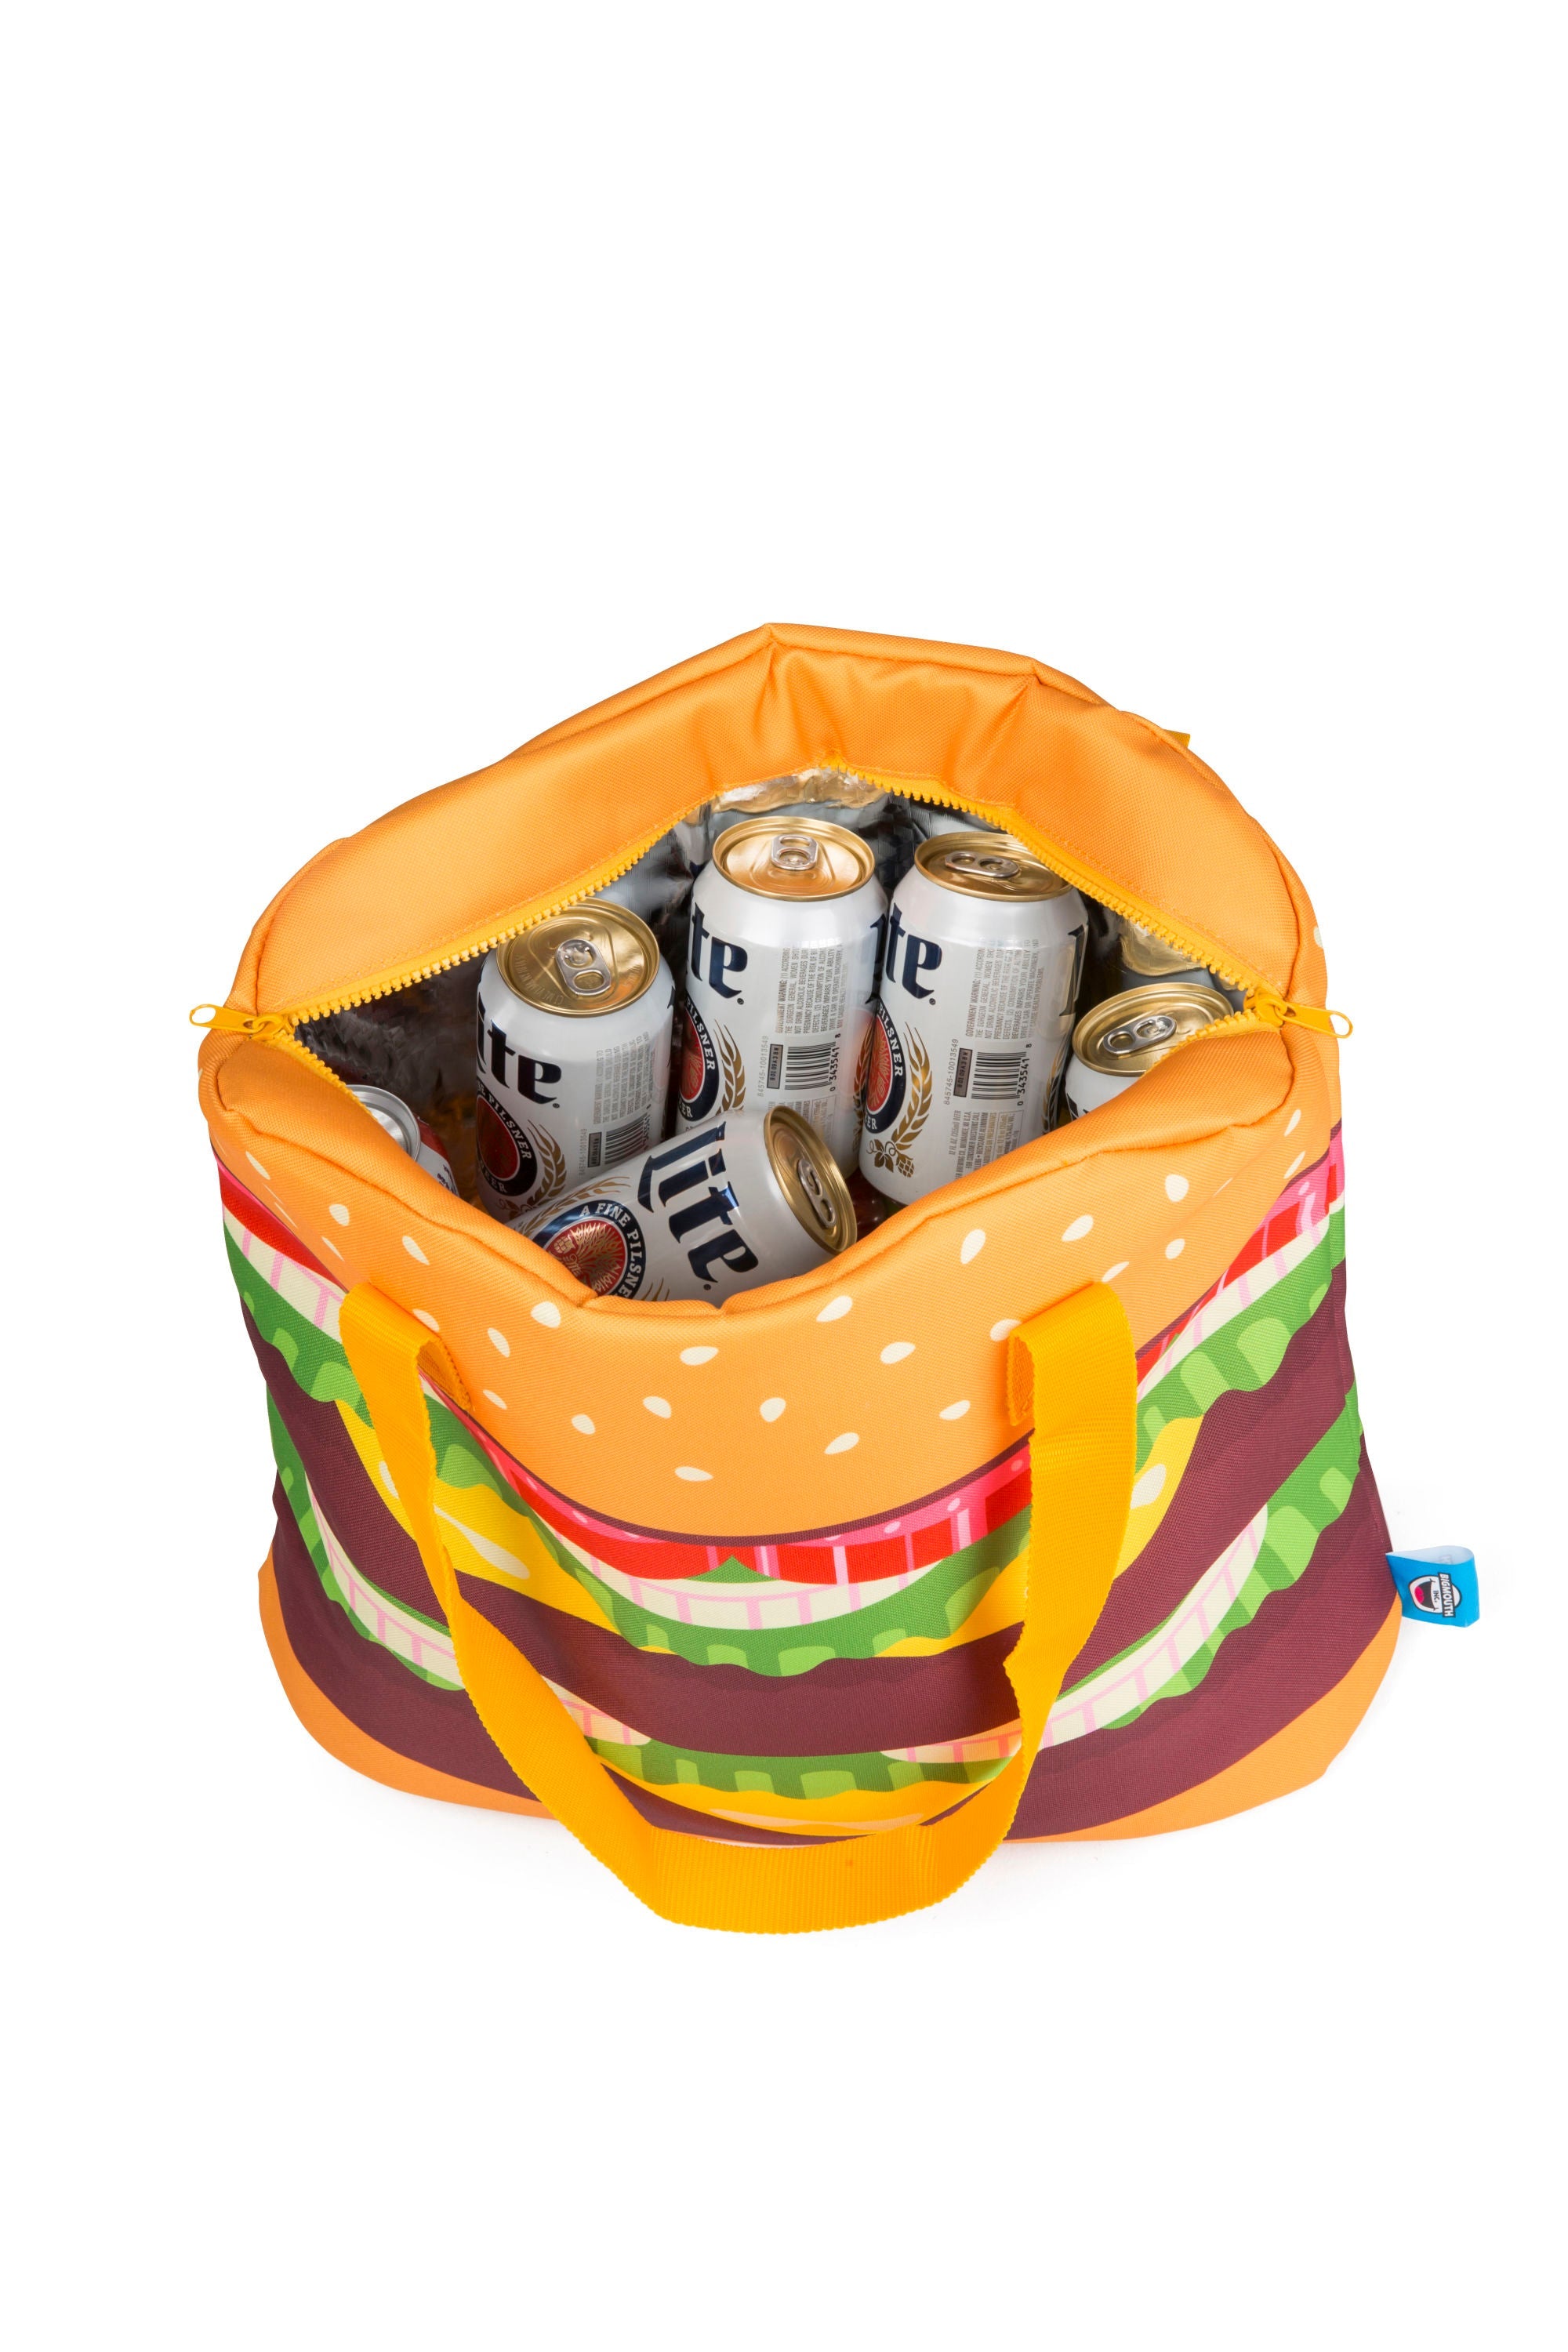 Giant Cheeseburger Cooler Bag